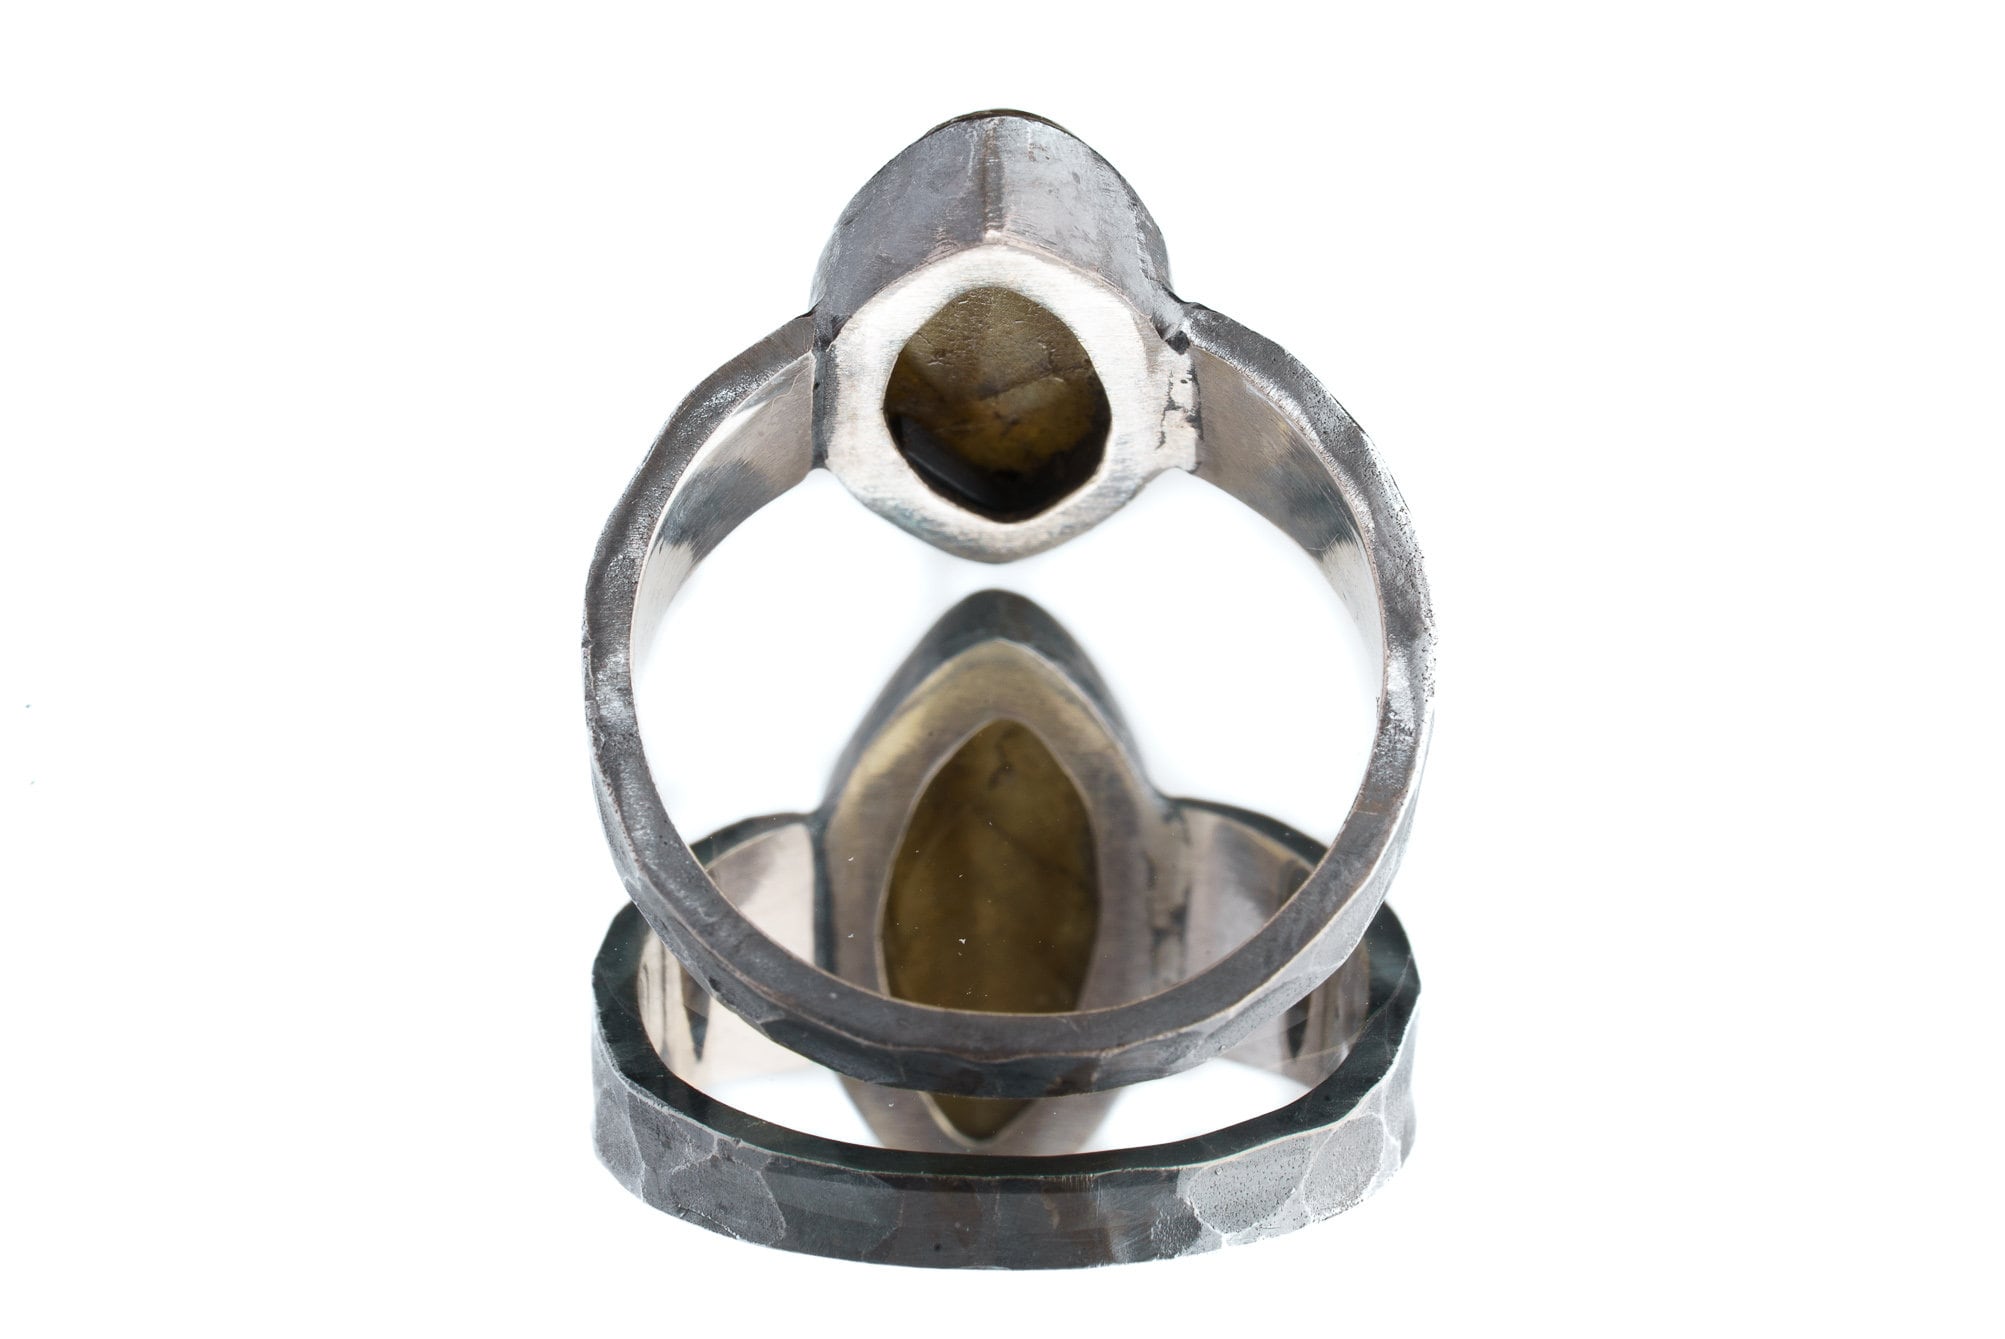 Cat Eye Labradorite - Unisex / Men - Large Crystal Ring - Size 10 3/4 US - 925 Sterling Silver - Hammer Textured & Oxidised